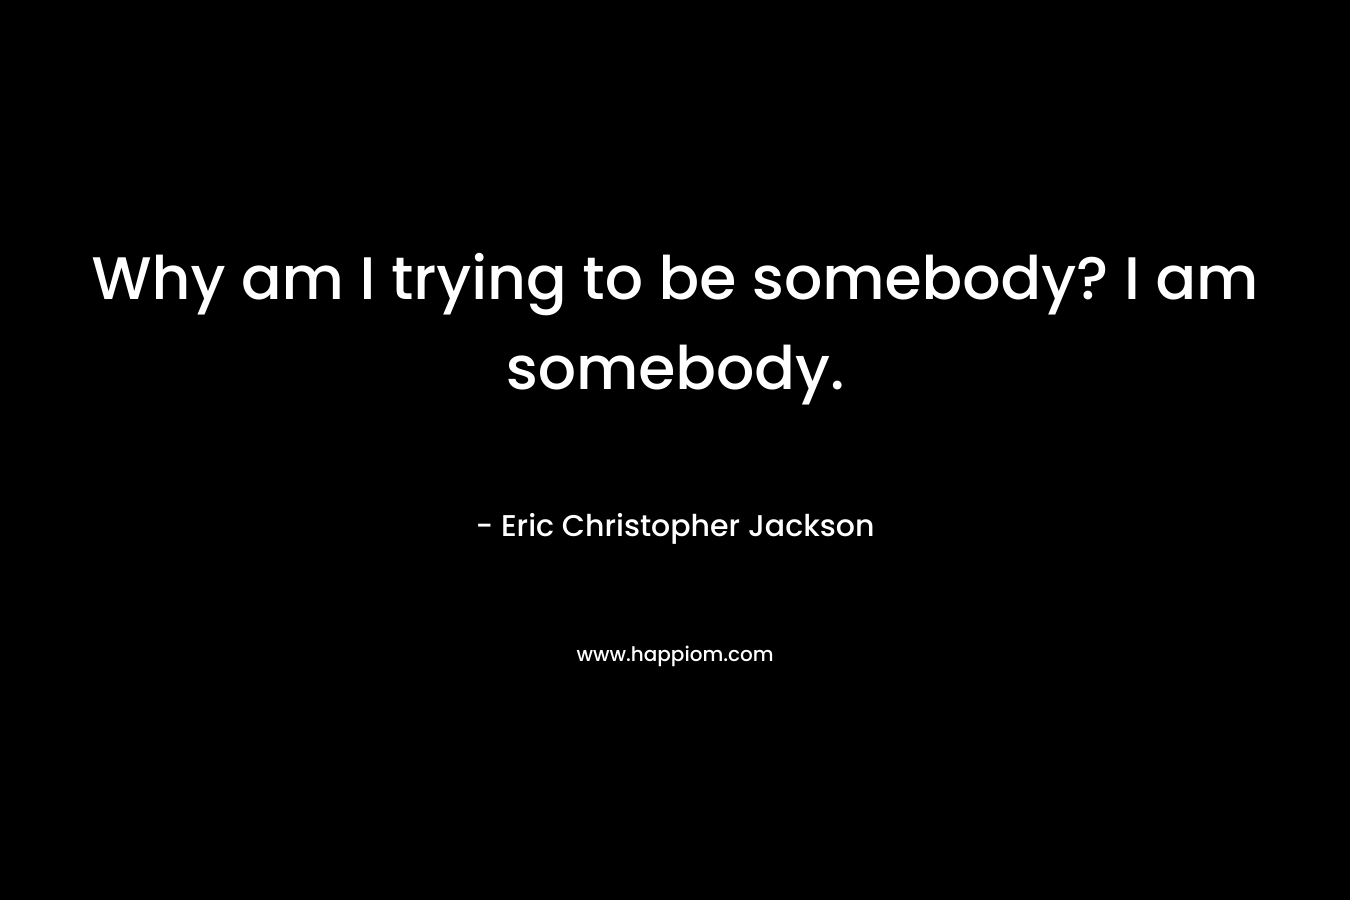 Why am I trying to be somebody? I am somebody.